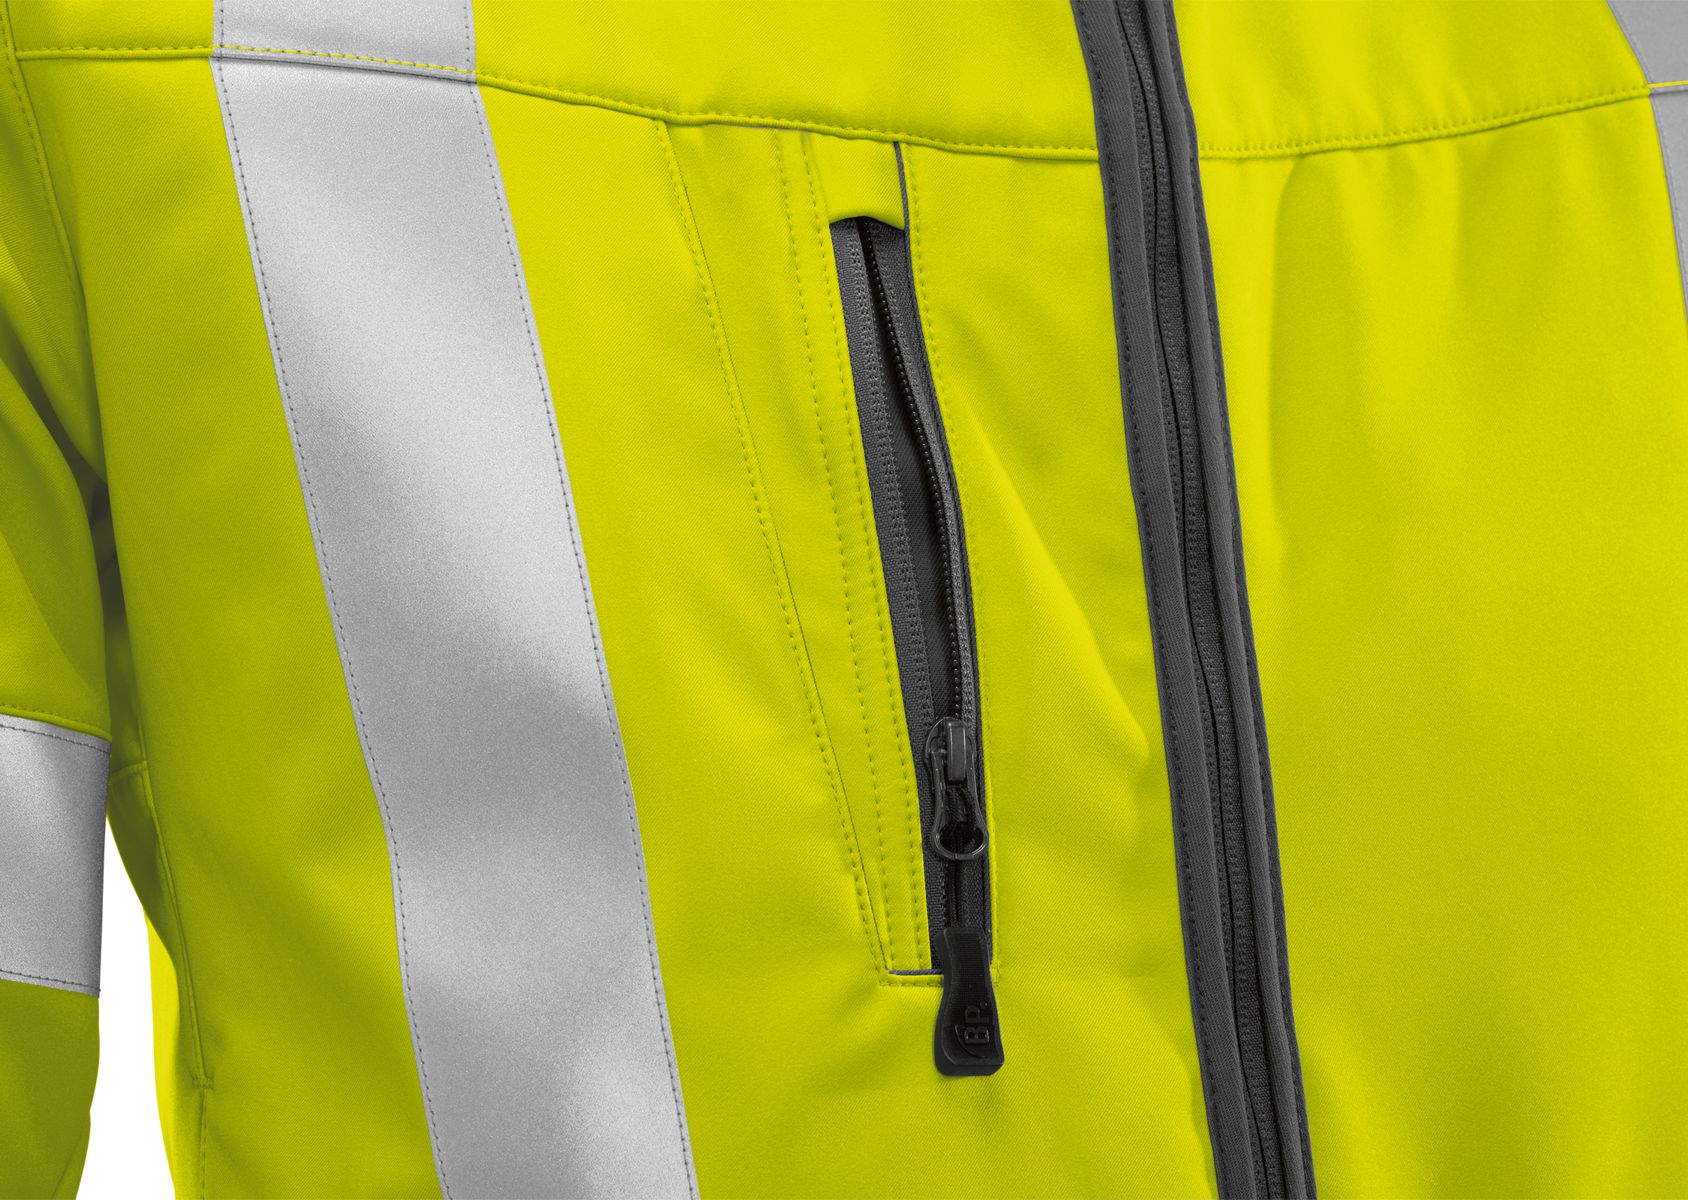 BP® High-visibility soft-shell jacket